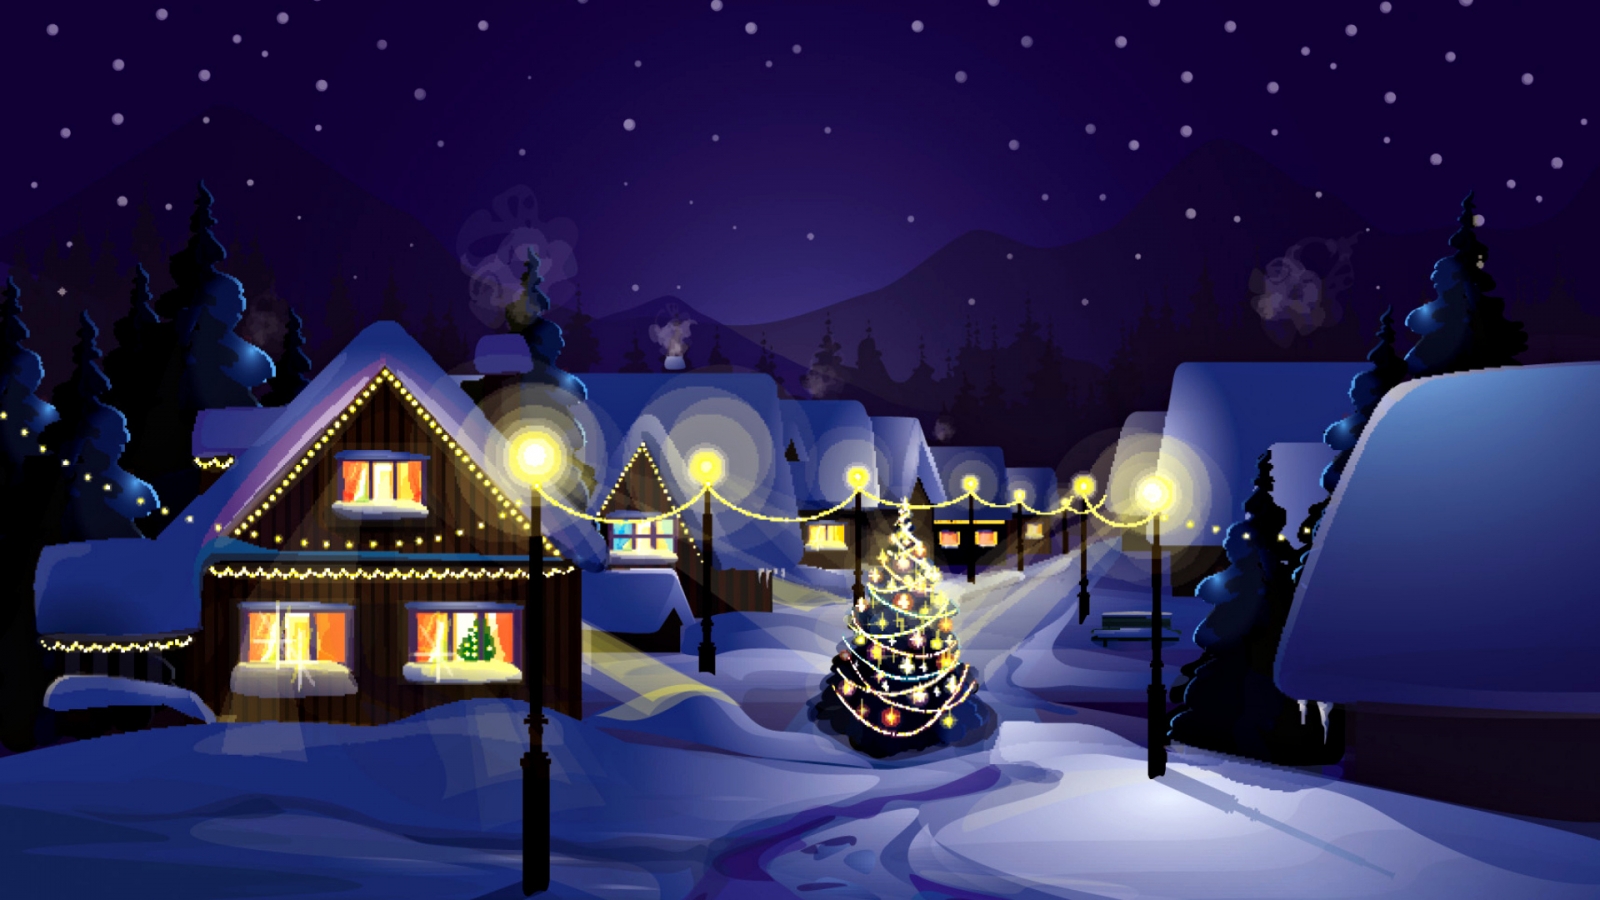 Christmas Village for 1600 x 900 HDTV resolution